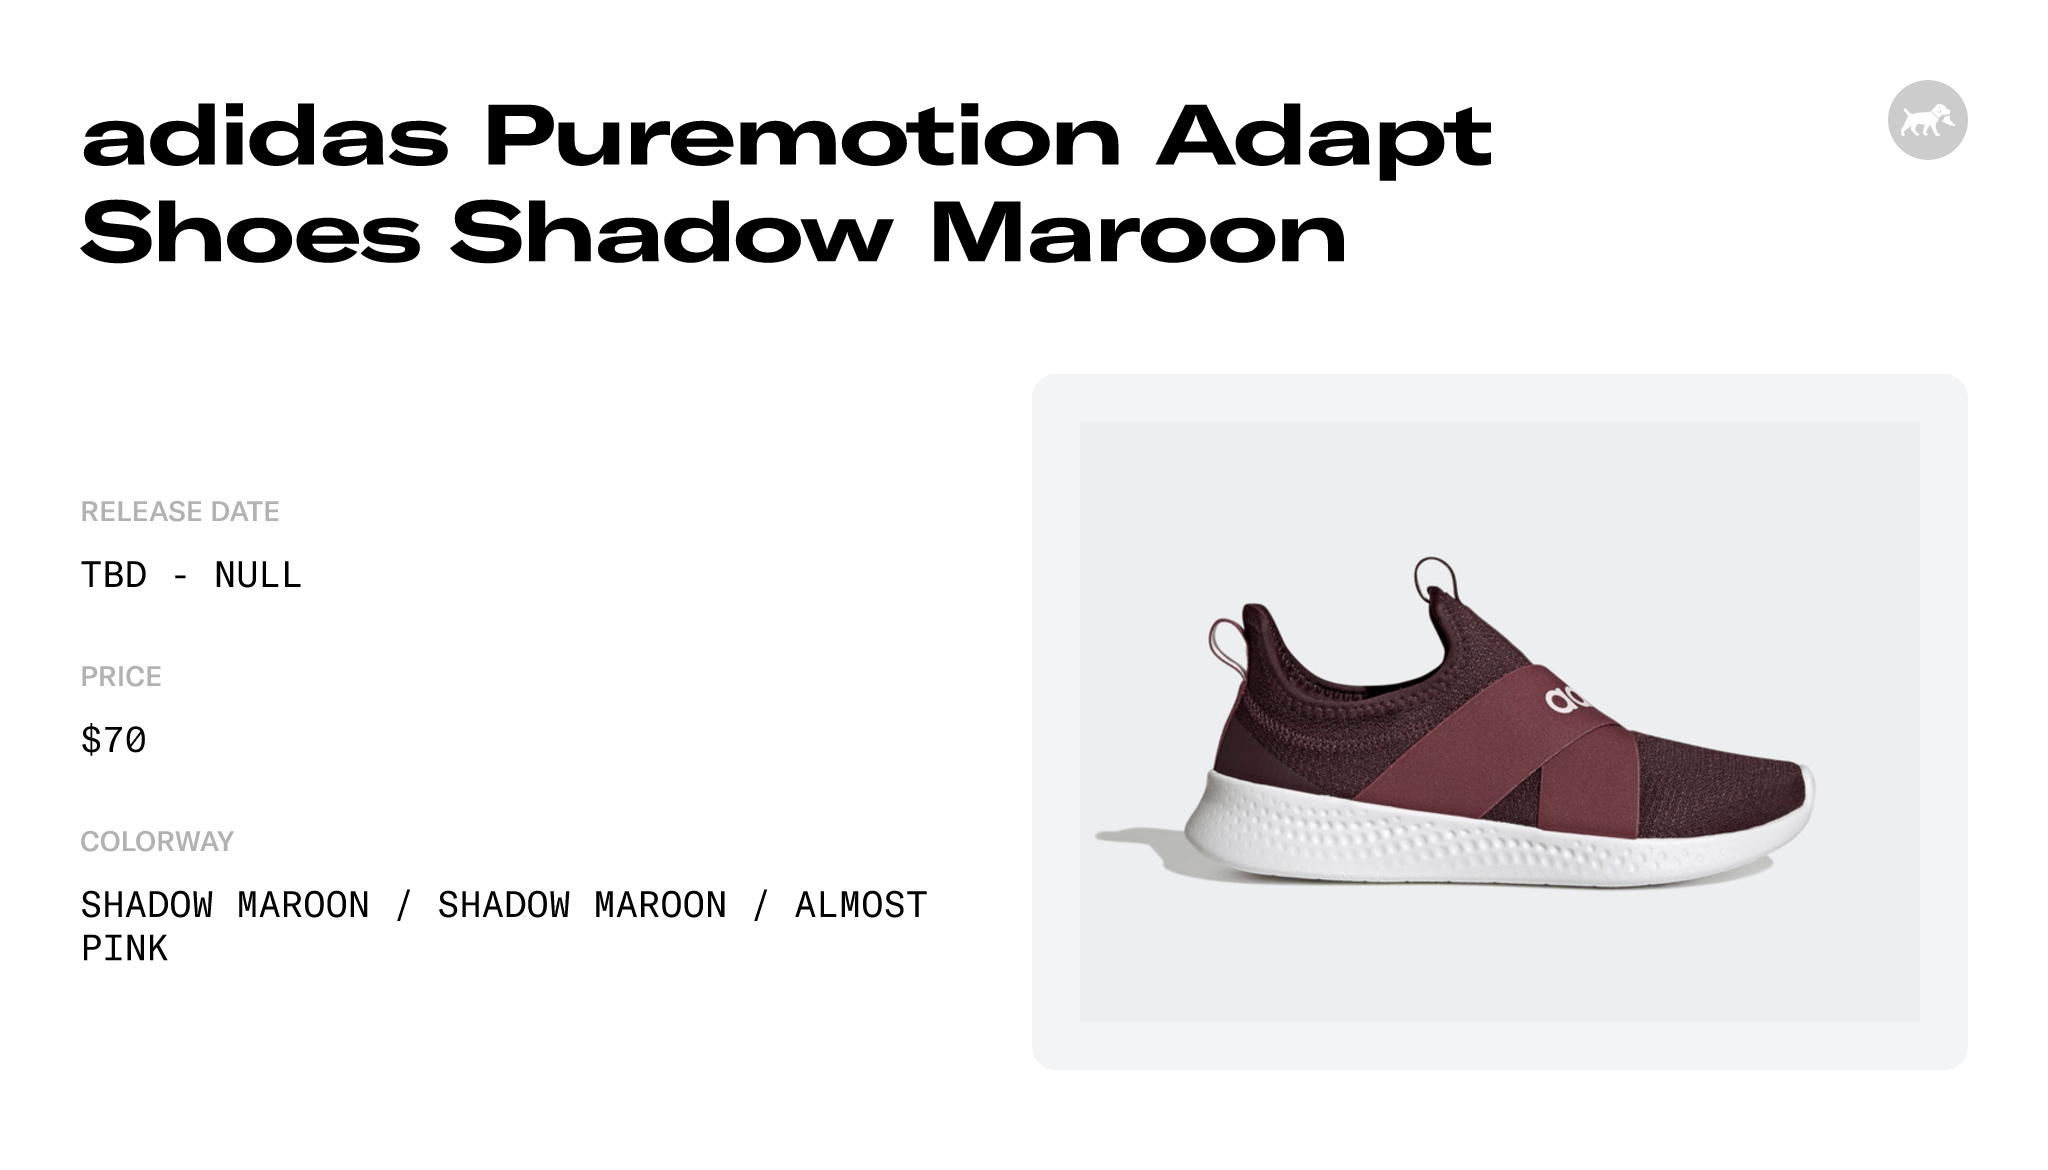 adidas PureMotion Adapt Womens Running Sneakers in Maroon